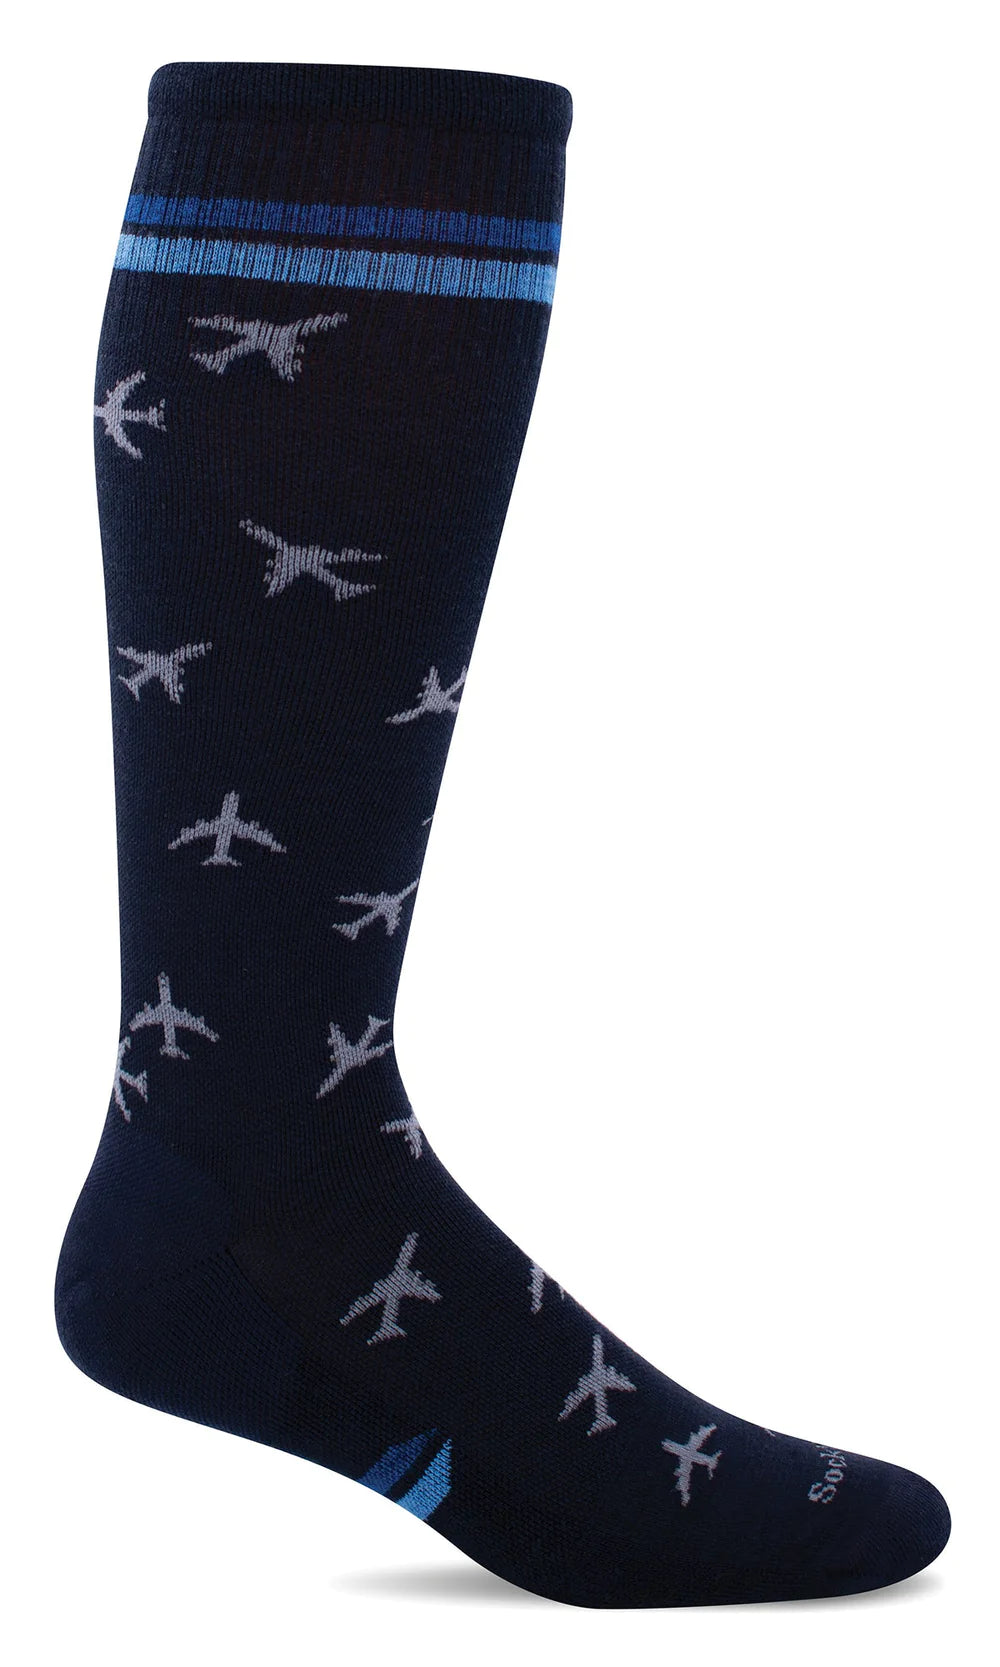 Men's In Flight Compression Sock, Charcoal 15-20 mmHg